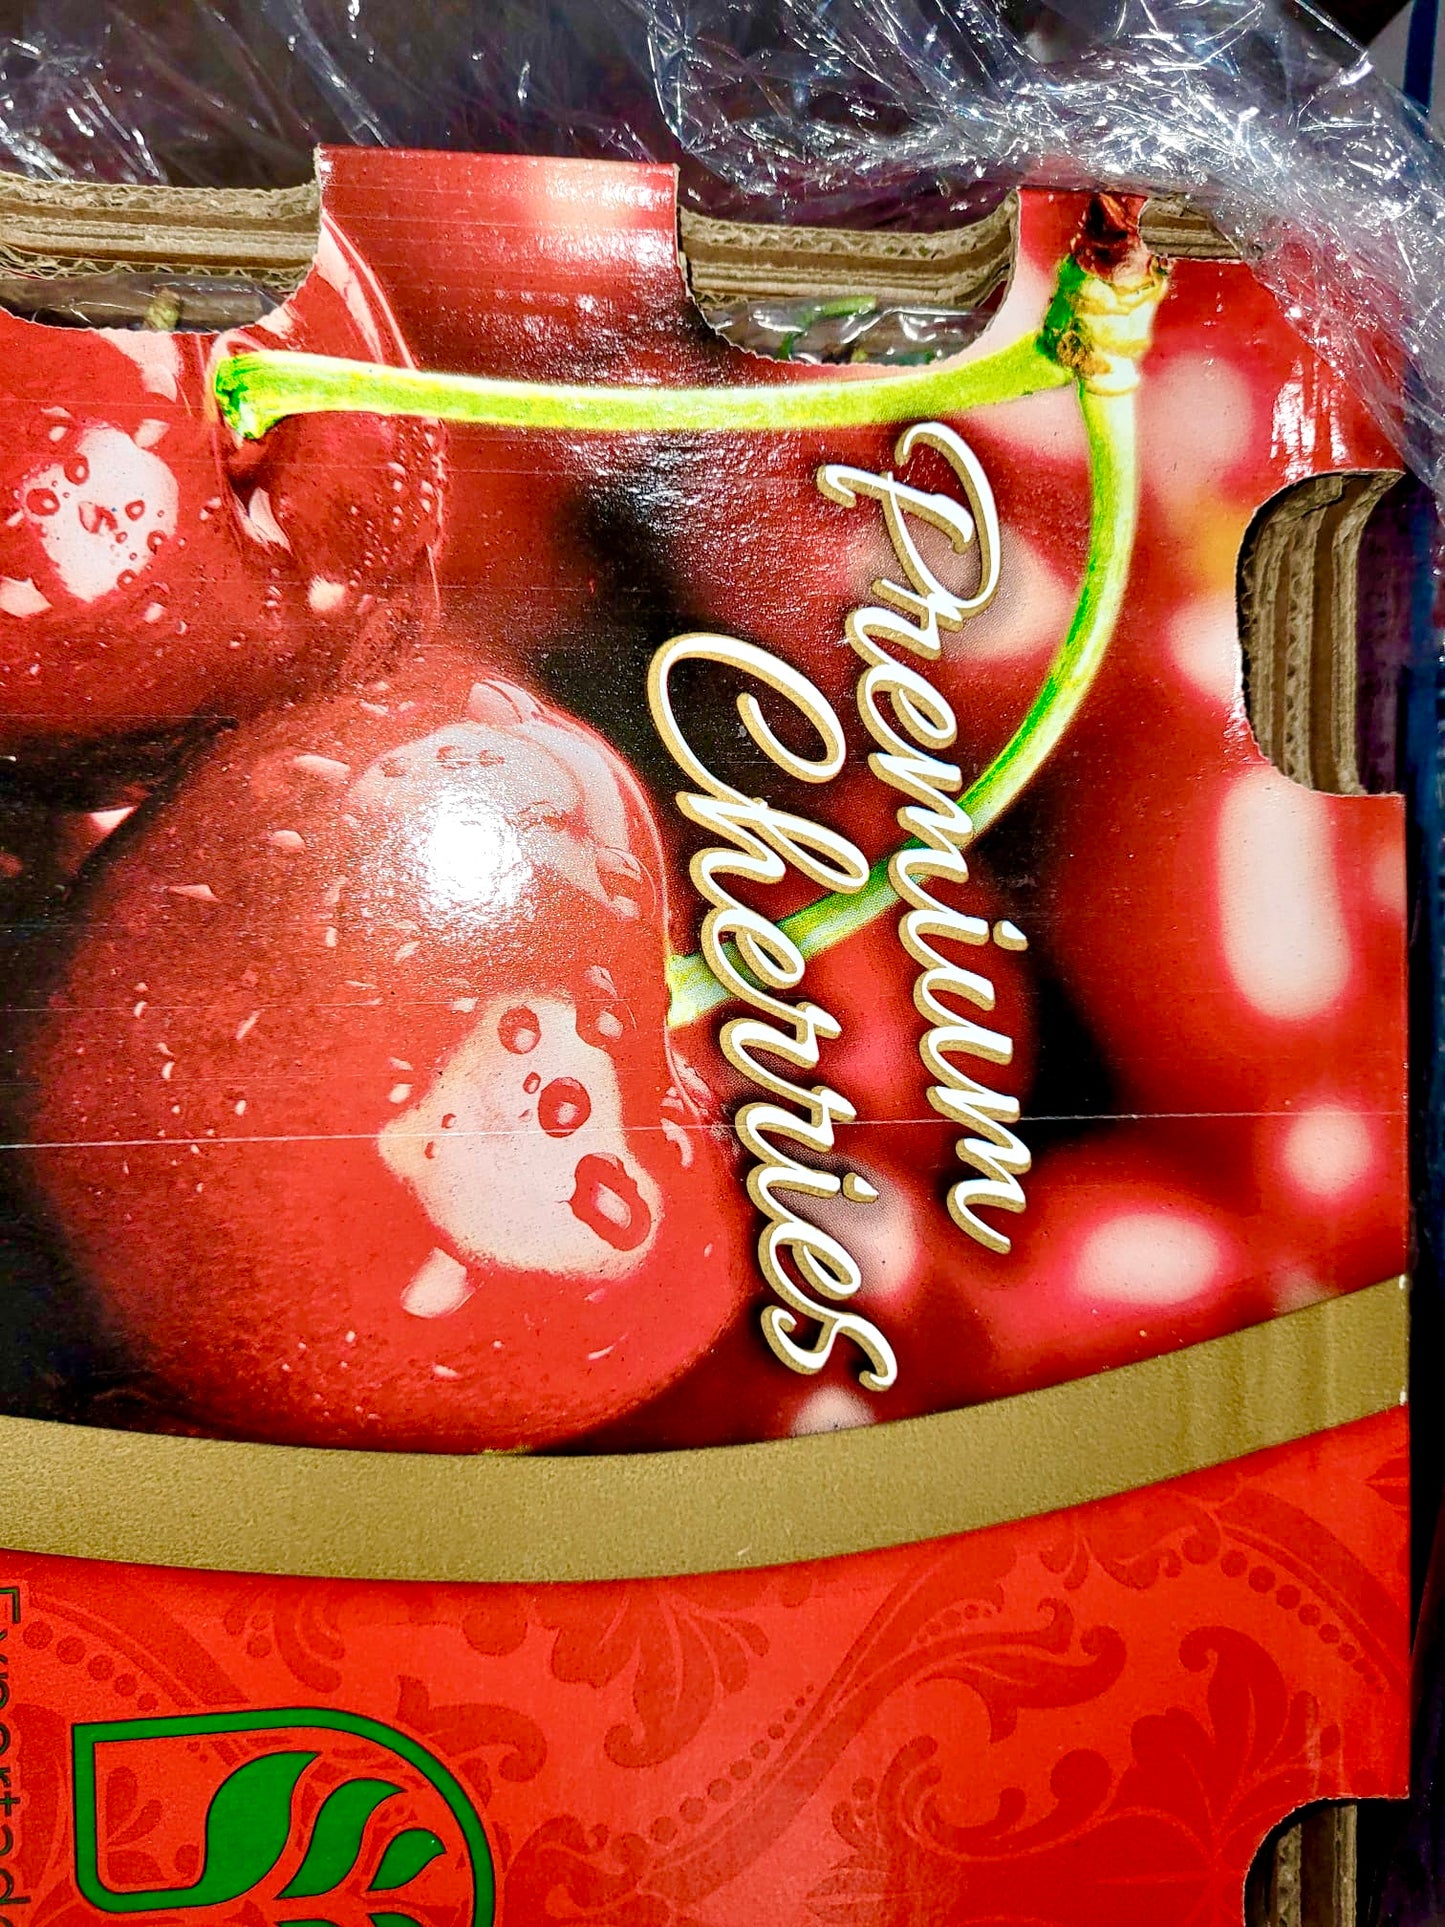 Cherries x5Kg Box